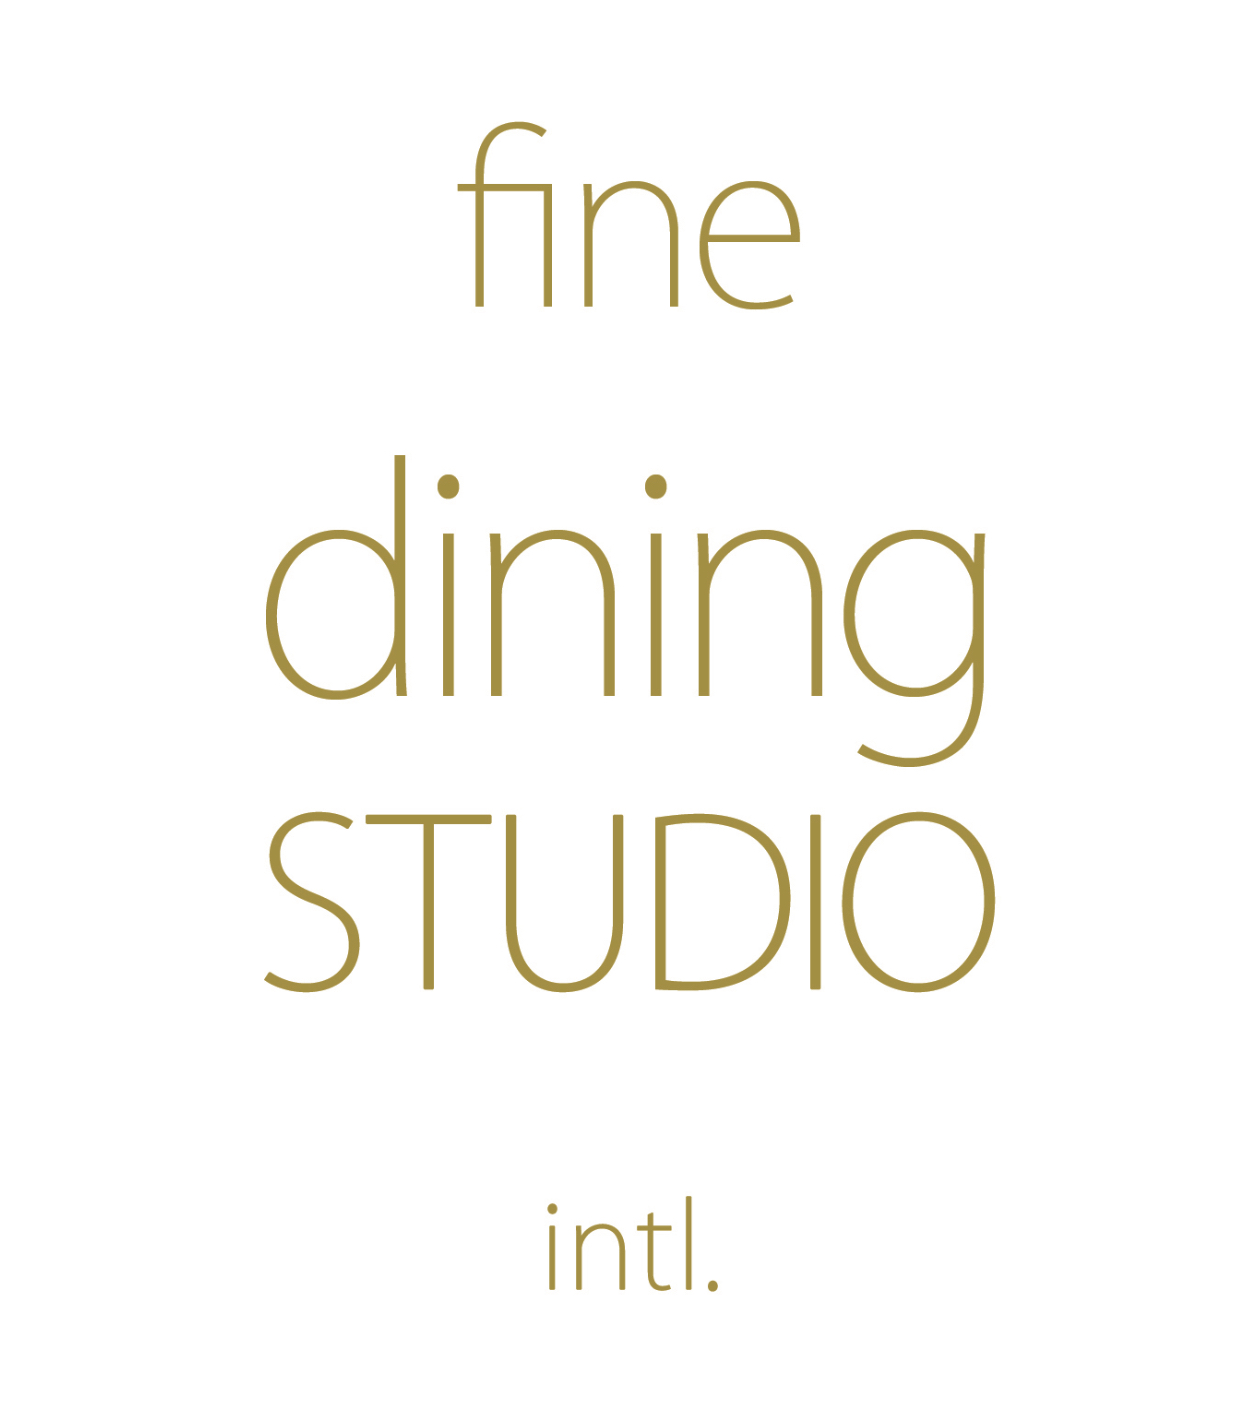 香港室內設計師網: fine dining STUDIO intl.